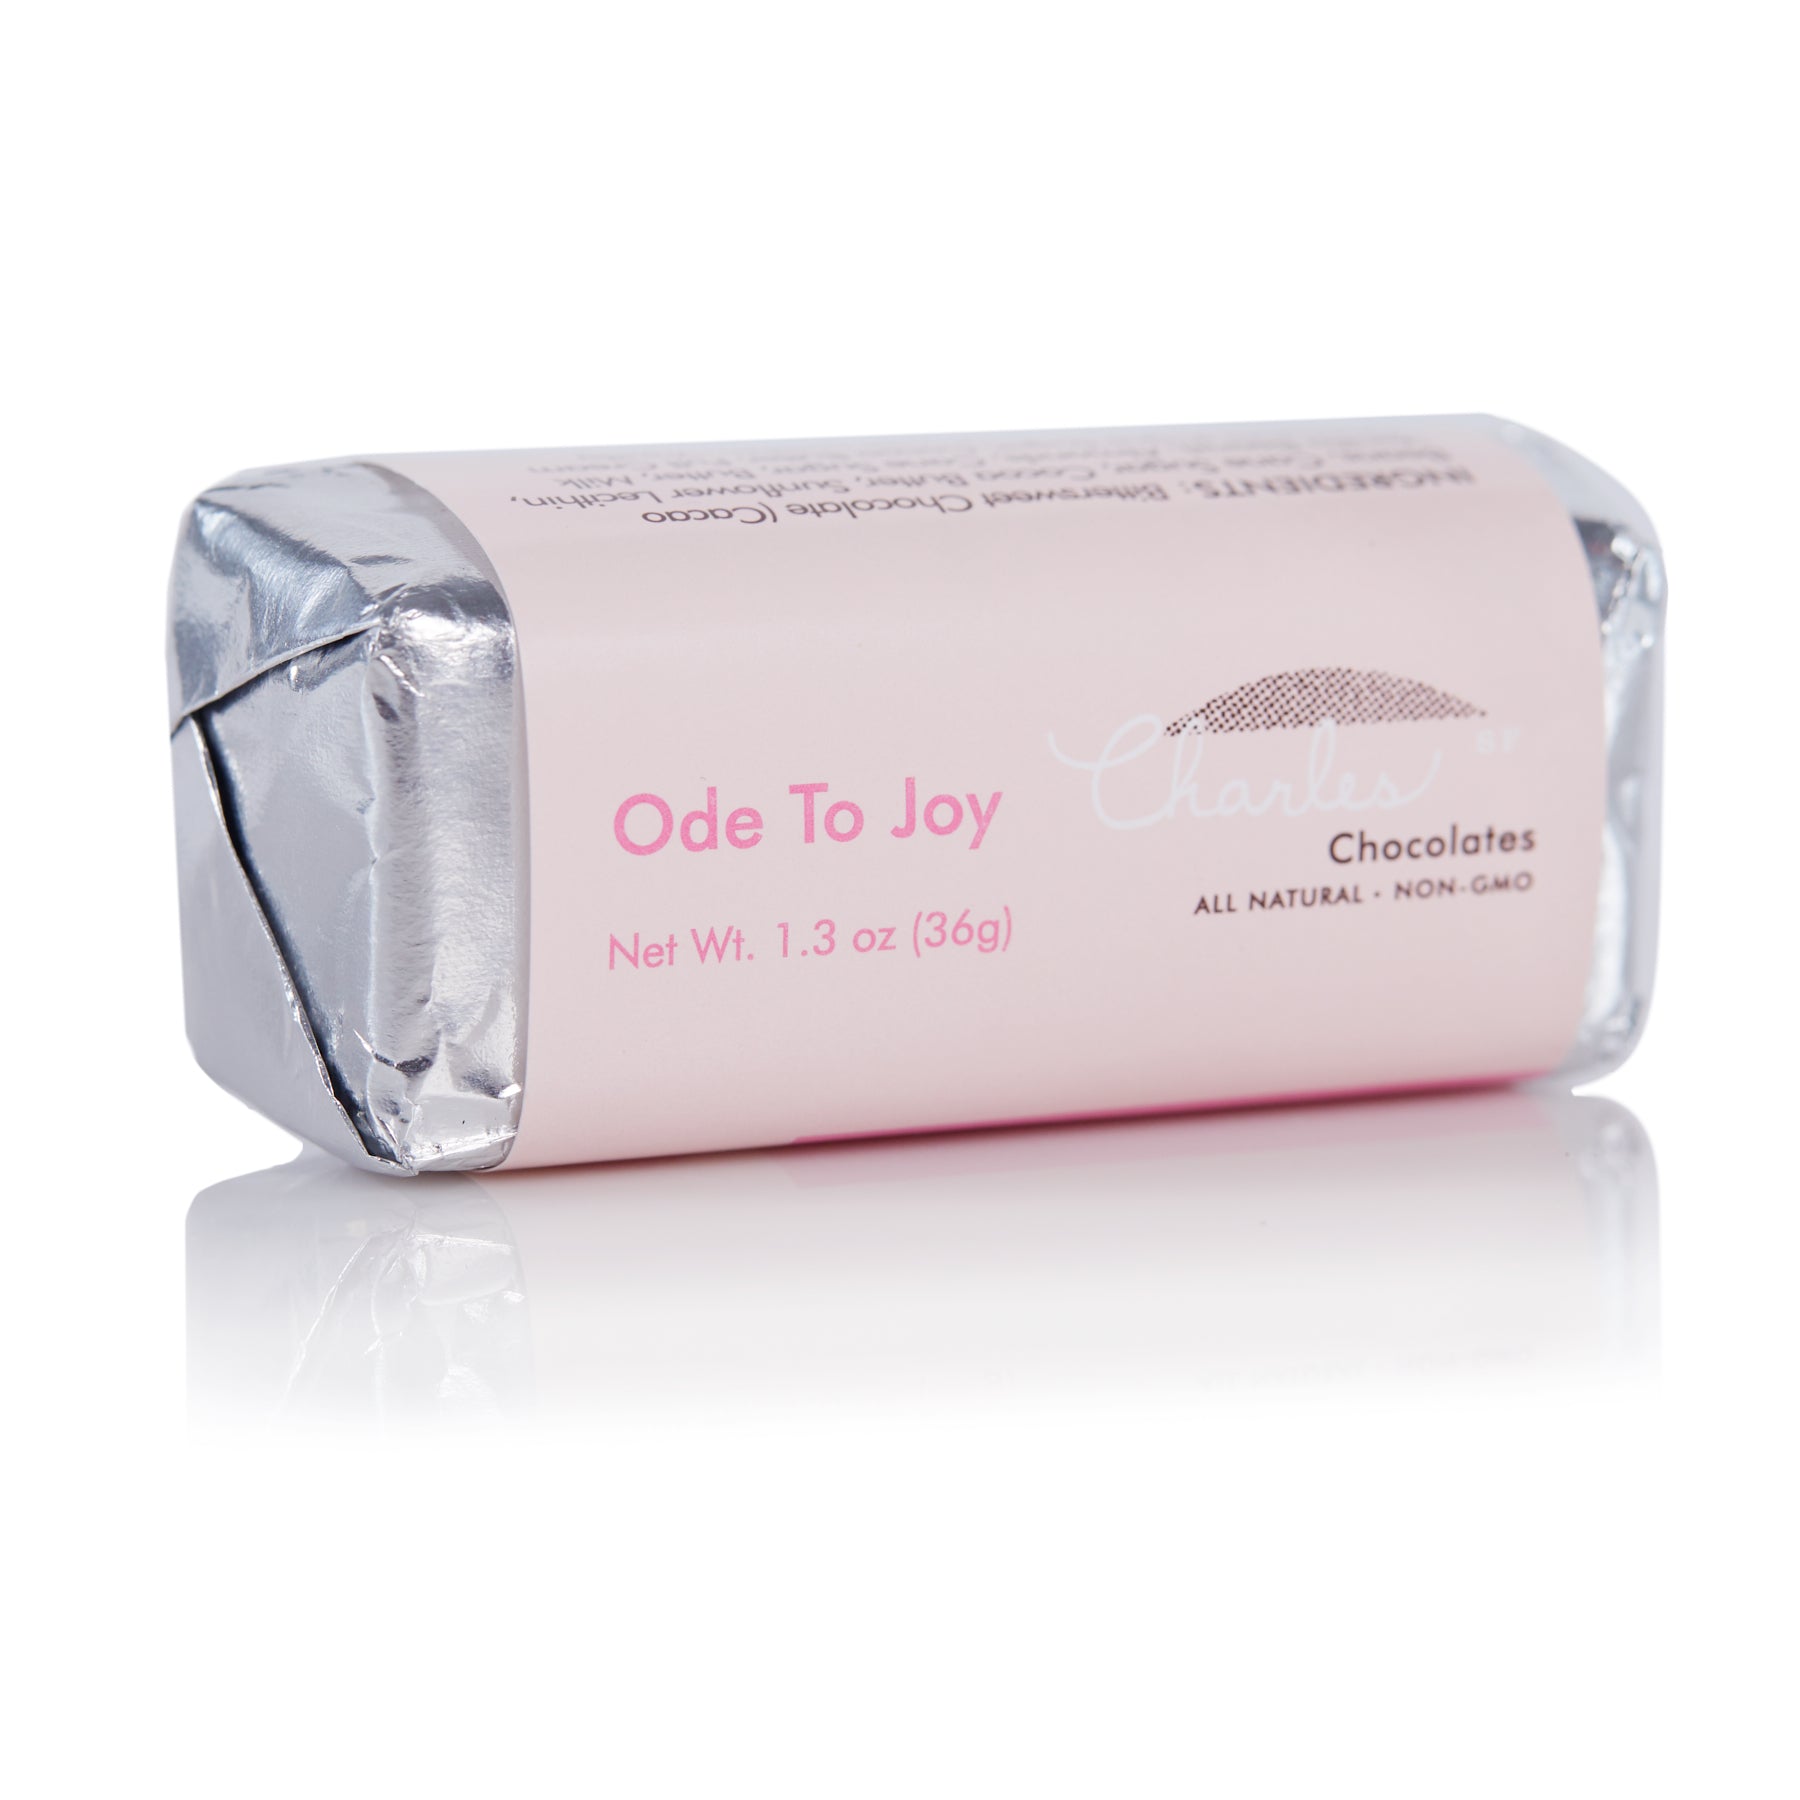 Charles Chocolates, Ode to Joy Mini Bar